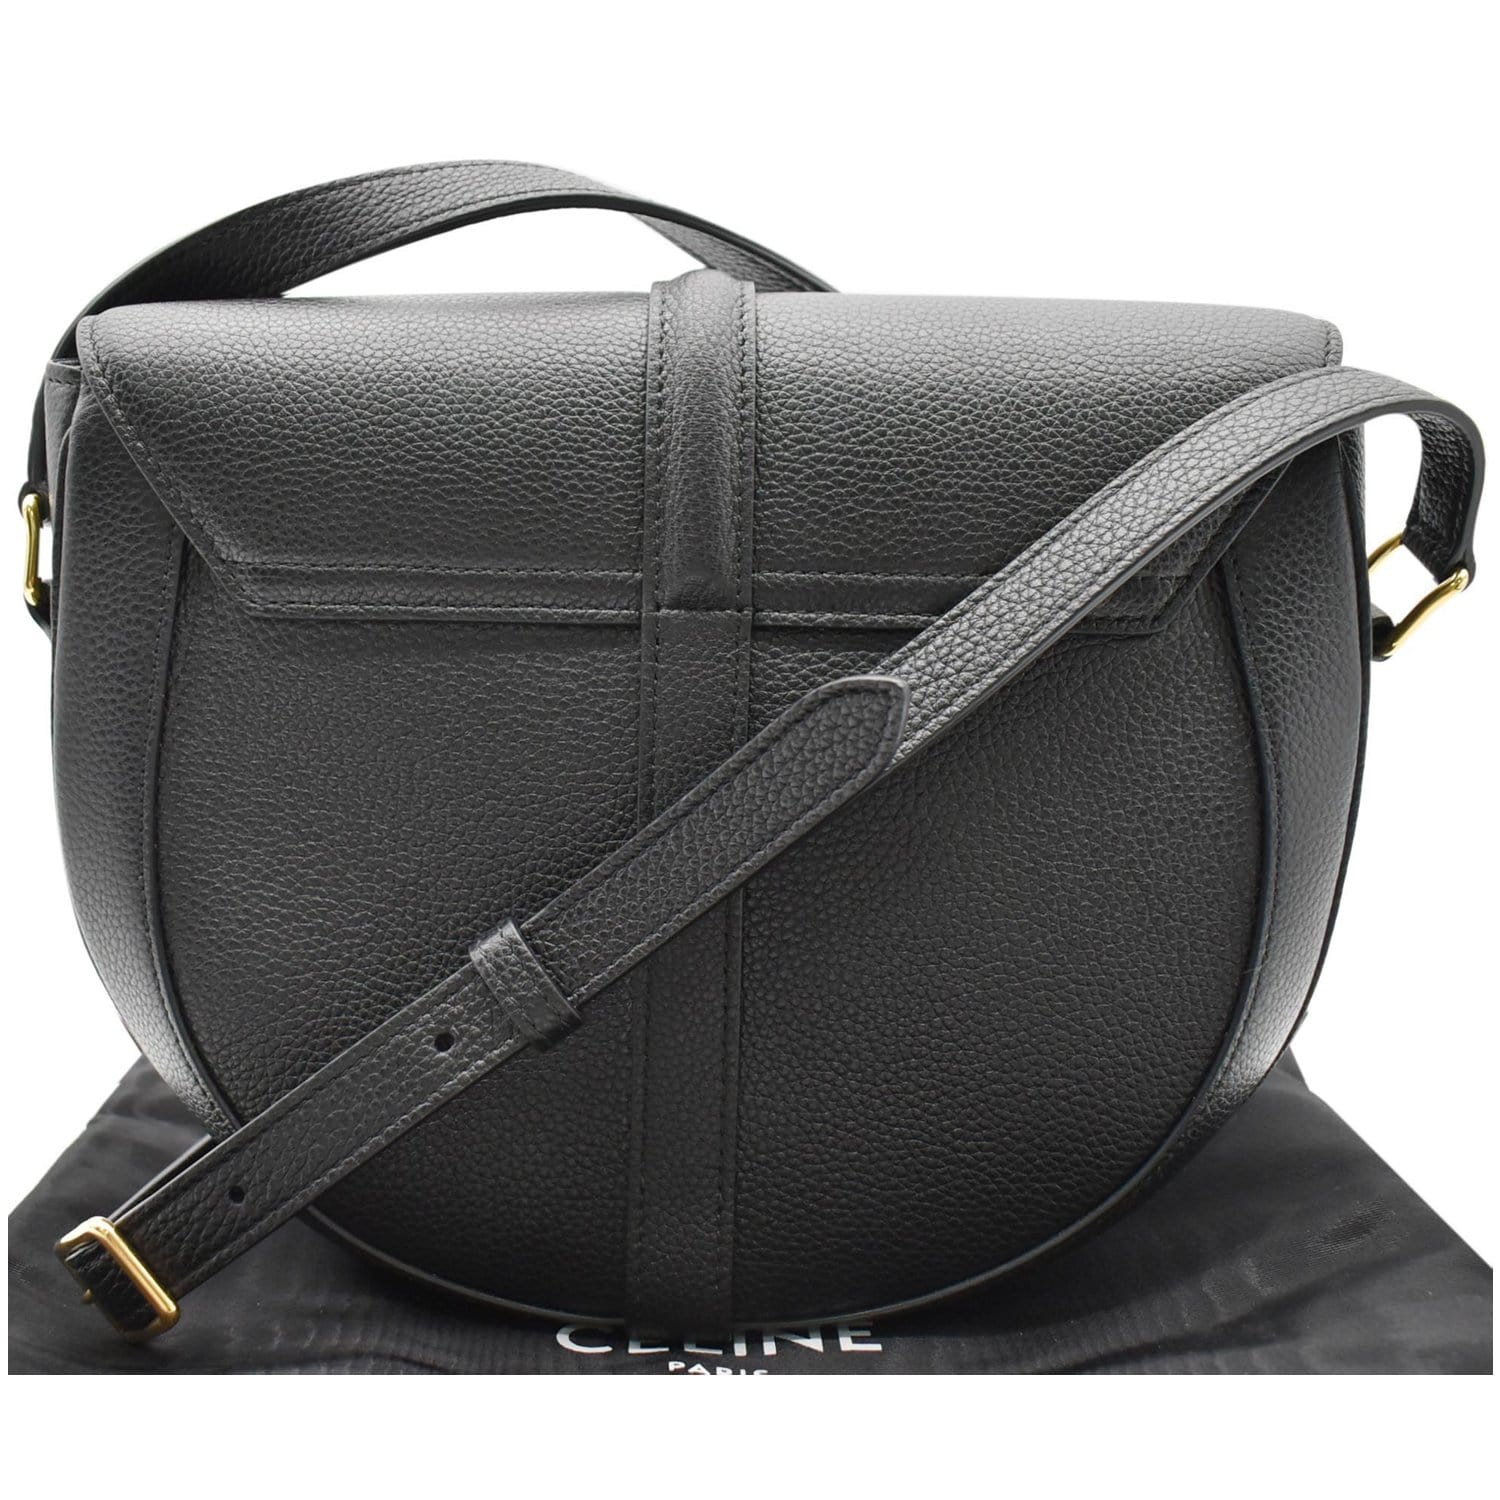 FWRD Renew Celine Small 16 Besace Shoulder Bag in Black